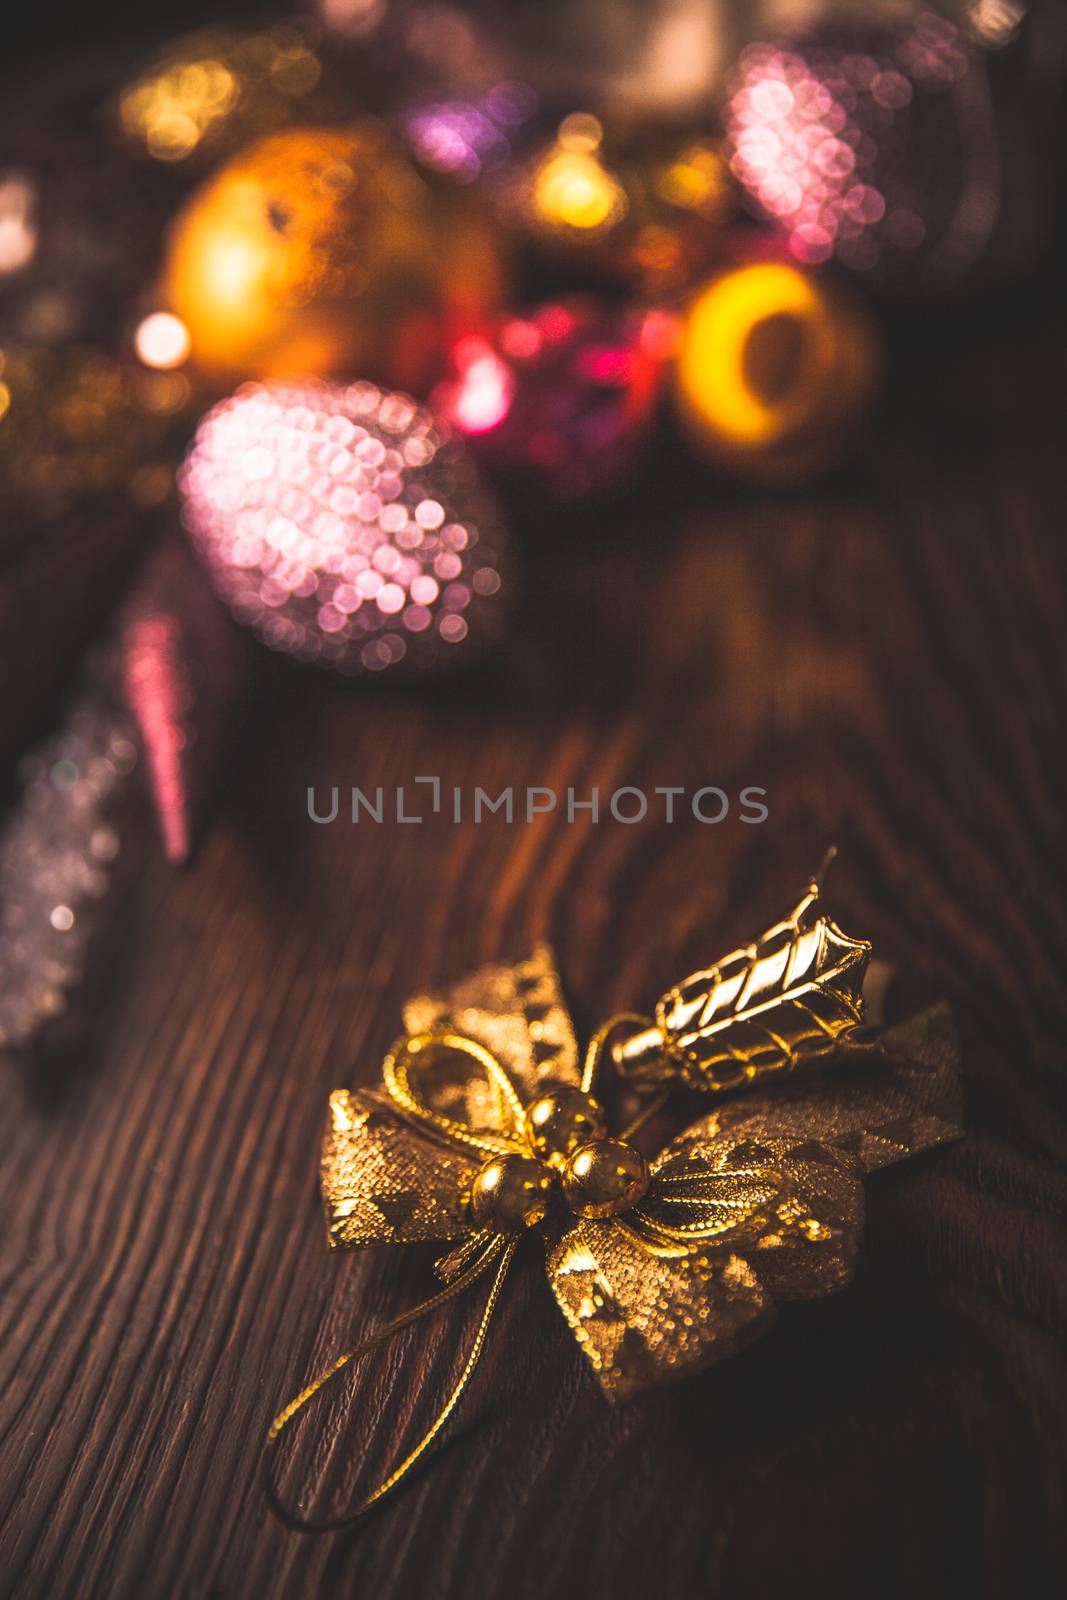  shiny retro decor for Christmas 2019 on dark wooden background by mi_viri